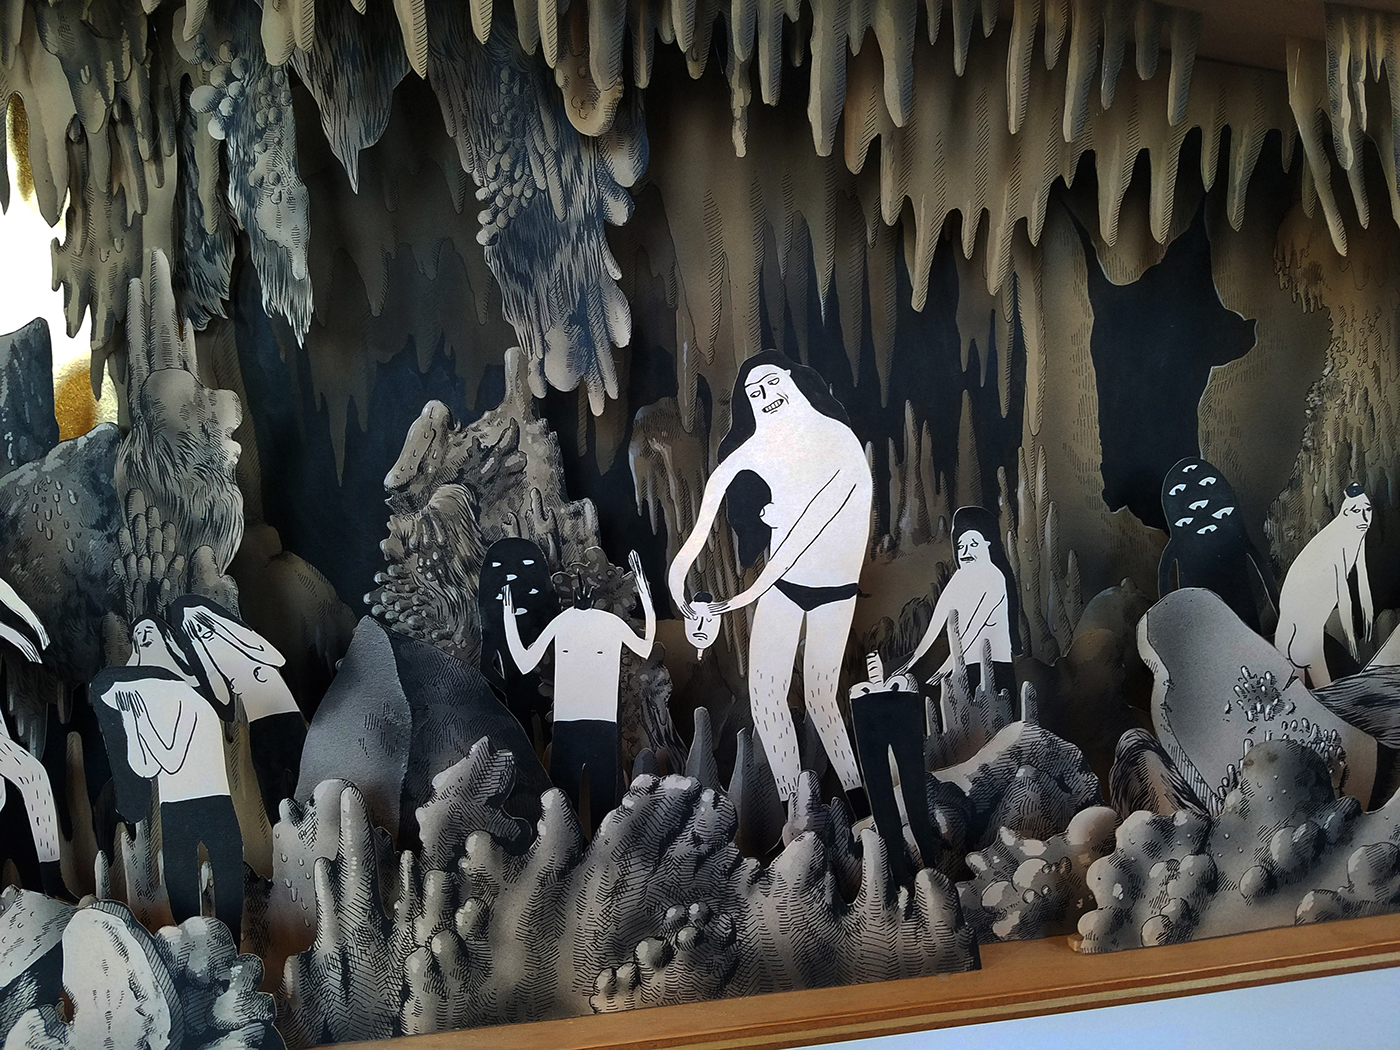 ILLUSTRATION  Drawing  painting   fantastic Diorama violence nightmare Sisters sculpture boston